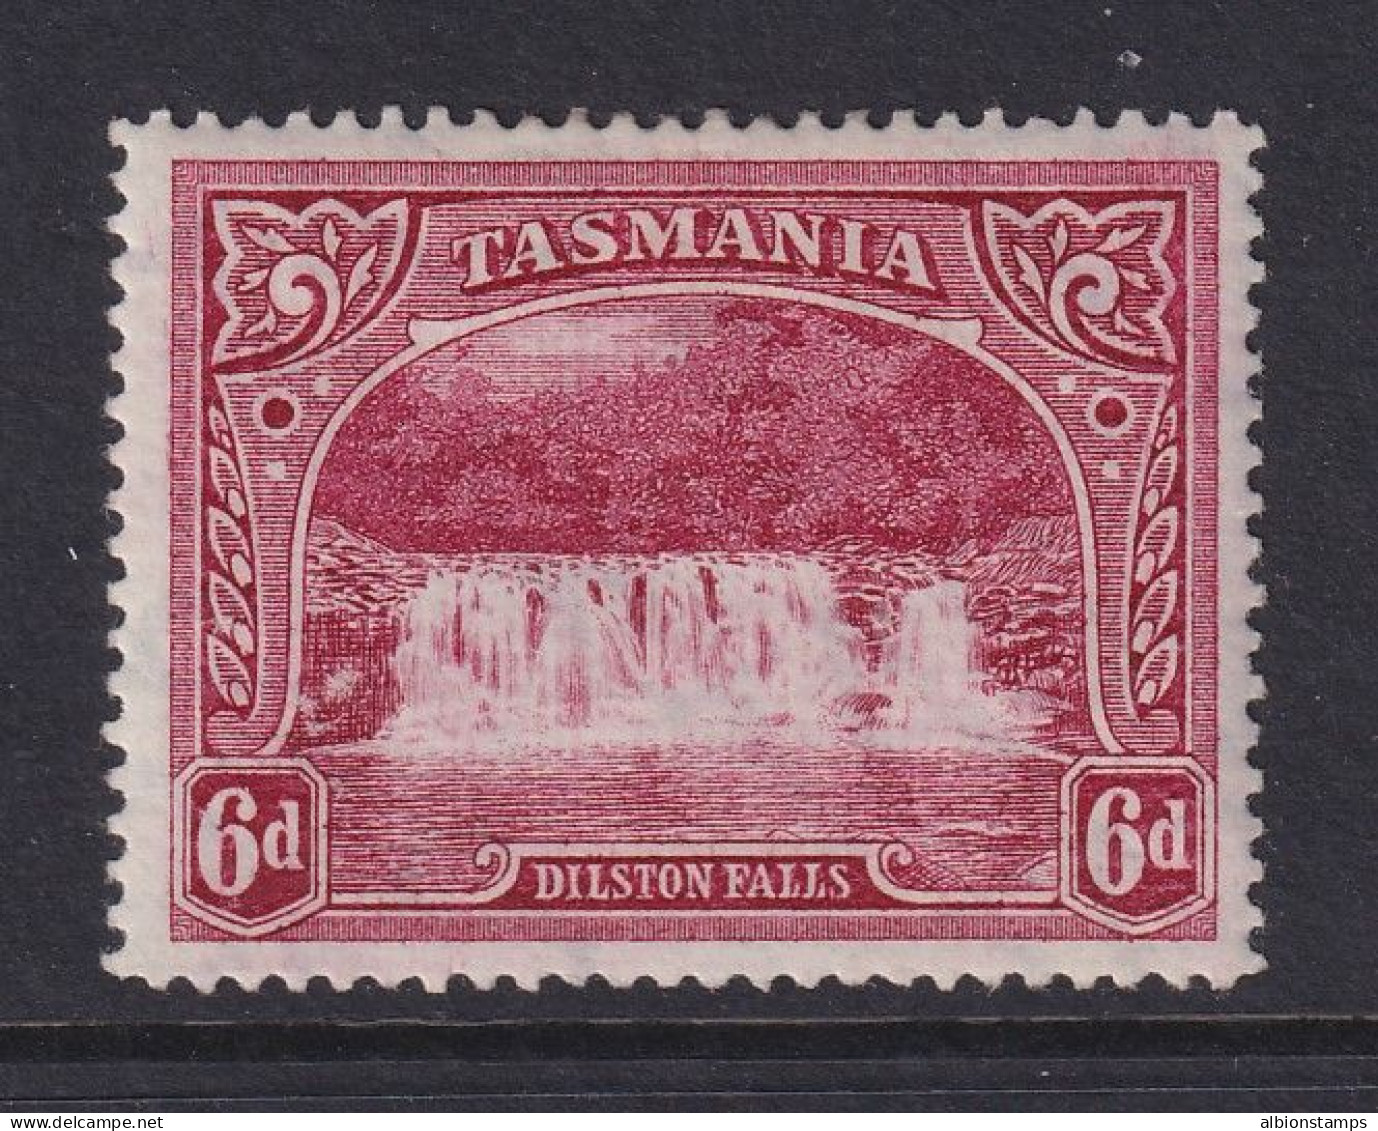 Tasmania, Scott 93 (SG 236), MLH - Mint Stamps